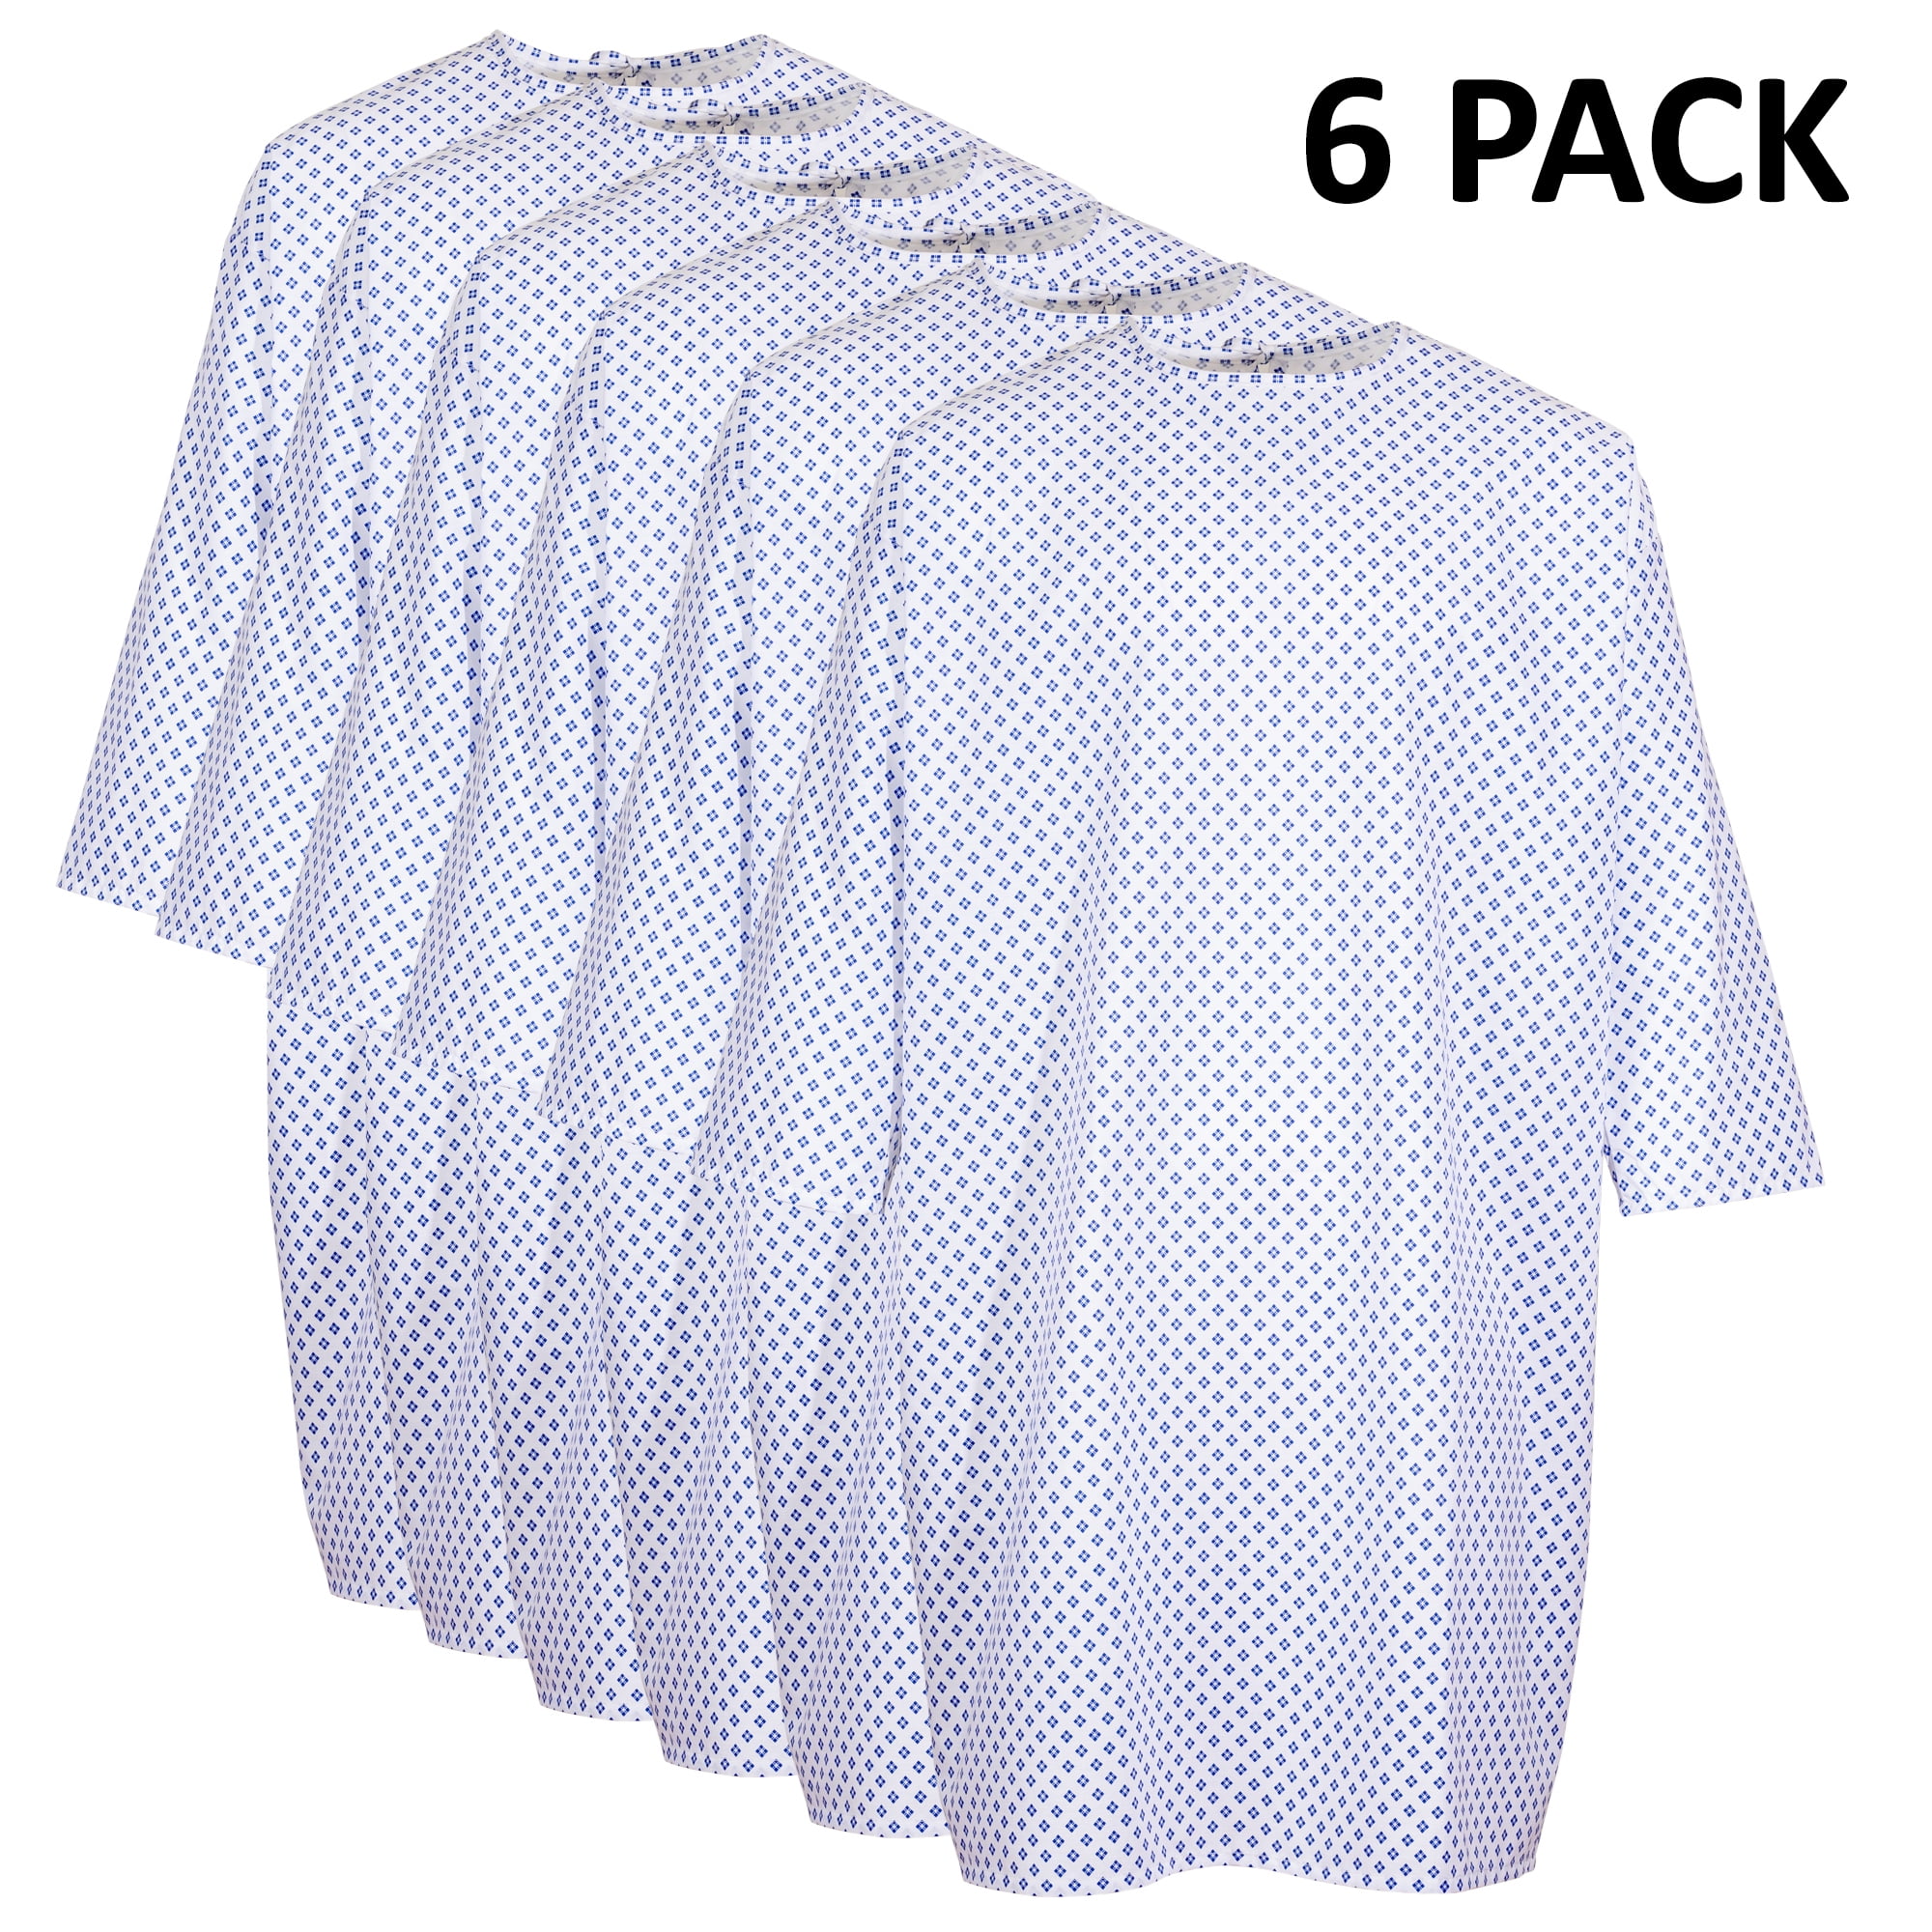 Deluxe Patient Hospital Gown, Easy Care, Soft & Comfortable Gowns - 4Pk -  Walmart.com | Patient gown, Hospital gown, Nursing dress